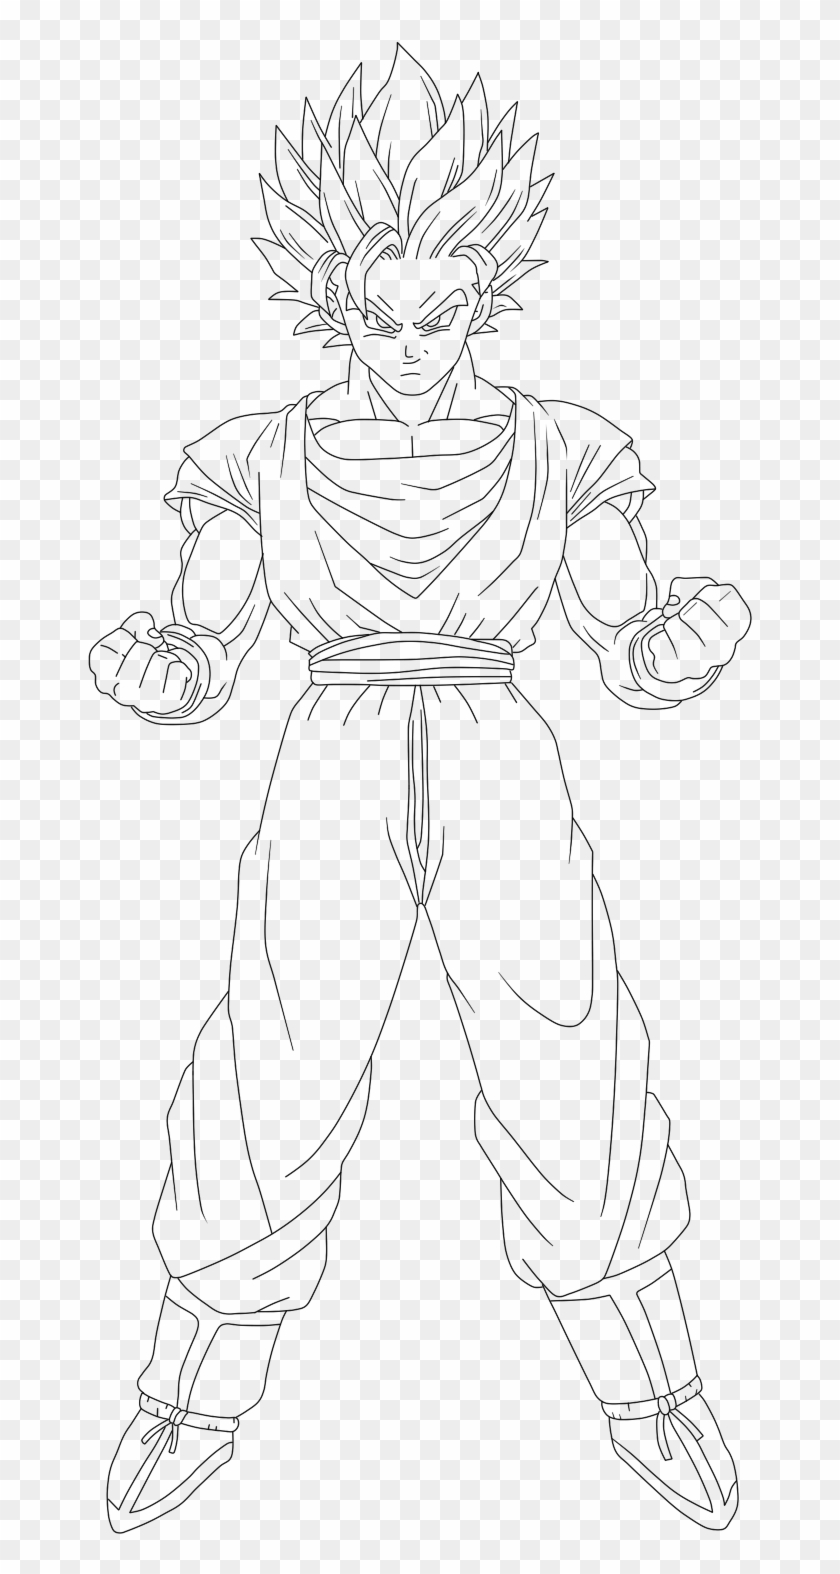 My drawing of Gohan SSJ2 from Dragon Ball : r/AnimeSketch